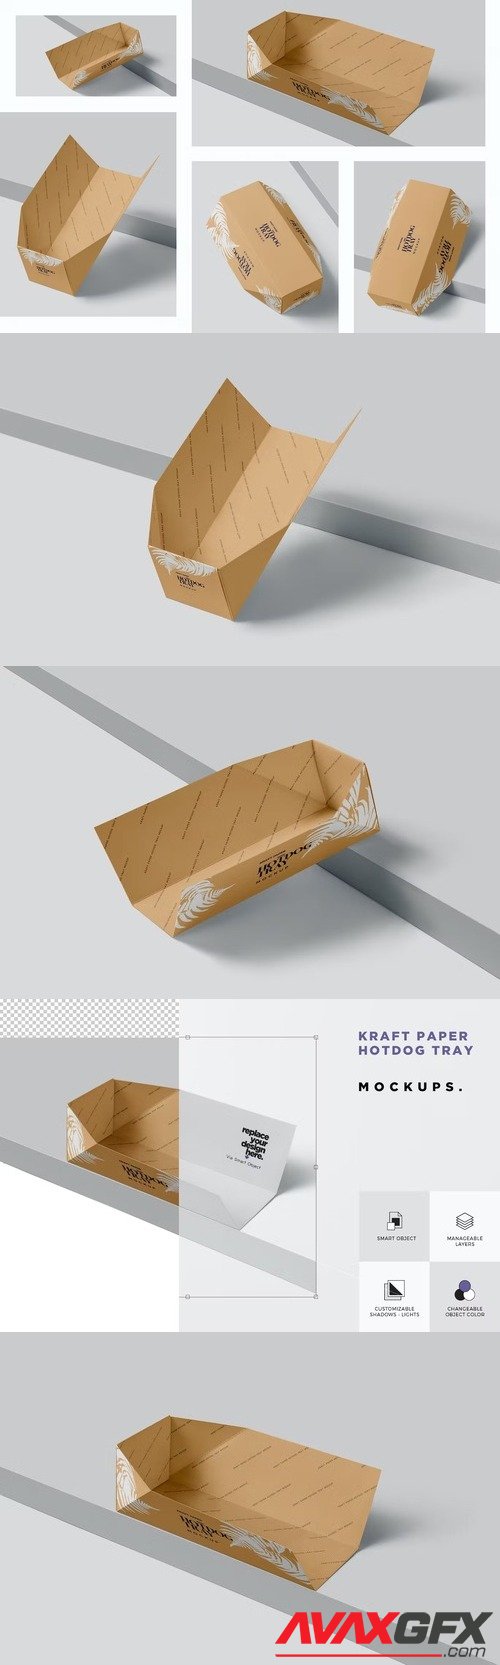 Kraft Paper Hot Dog Tray Mockups YMAHREH